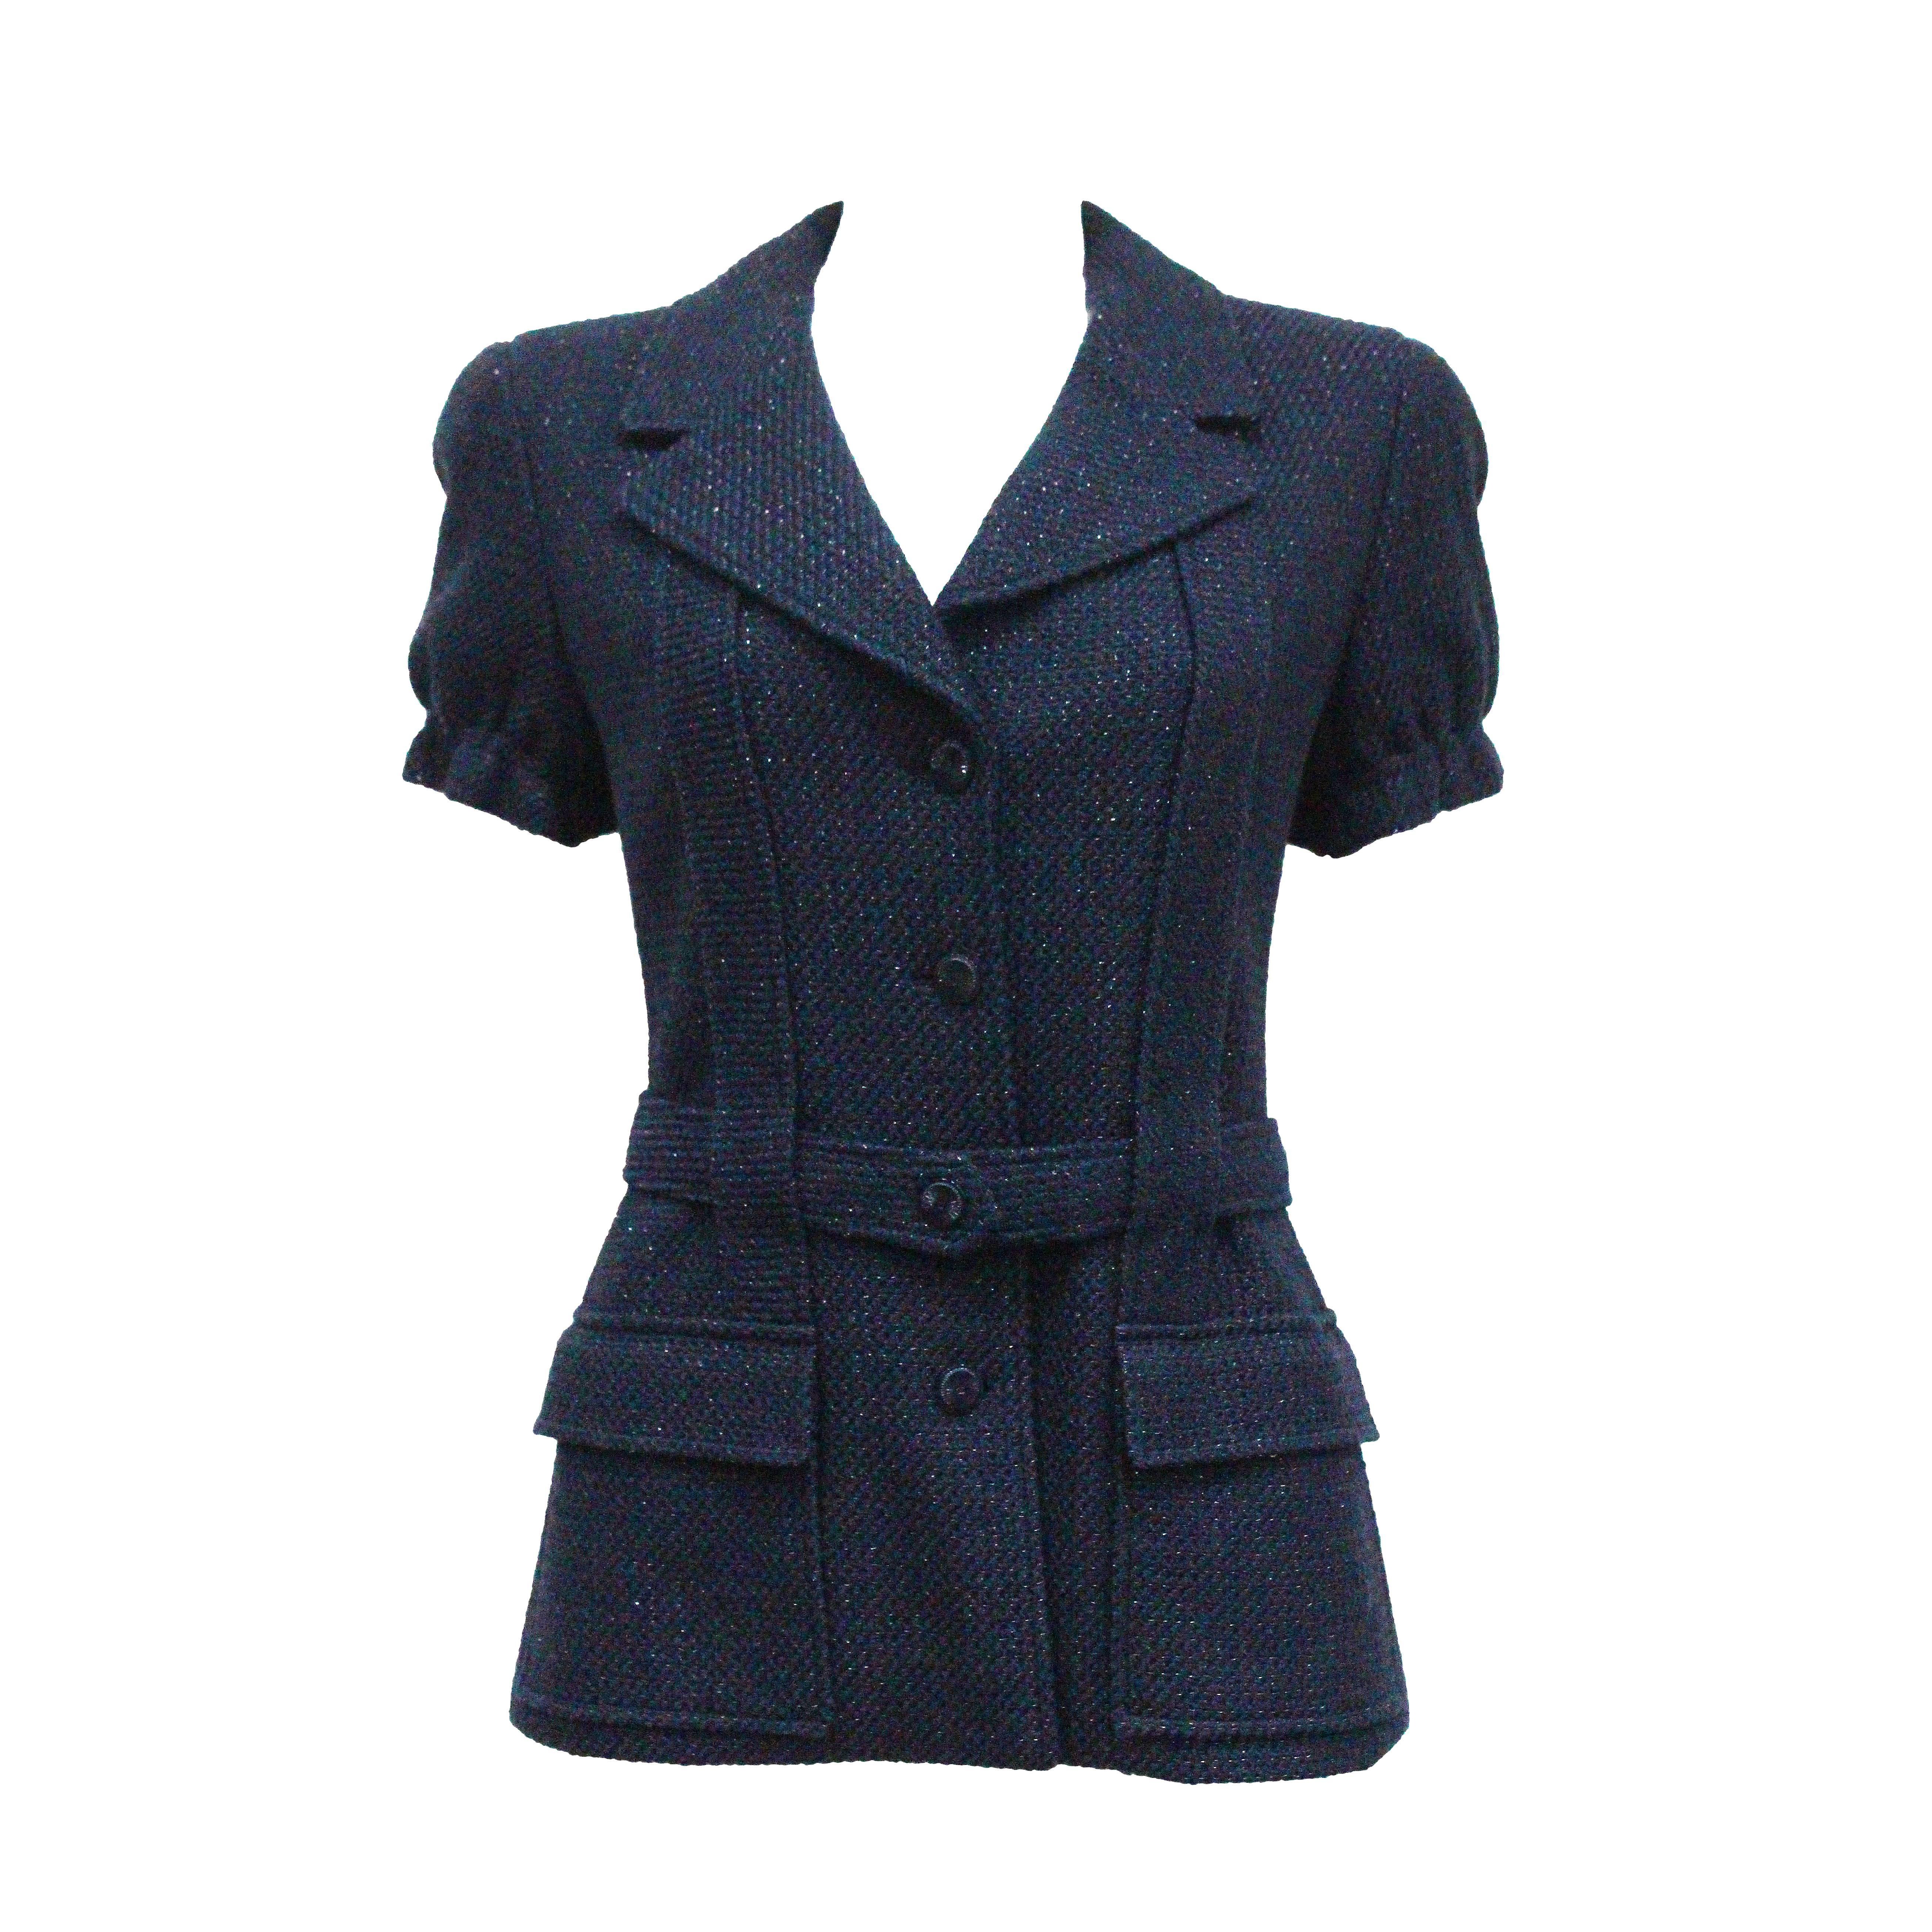 Chanel marine blue tweed short sleeved belted jacket, c. 2001